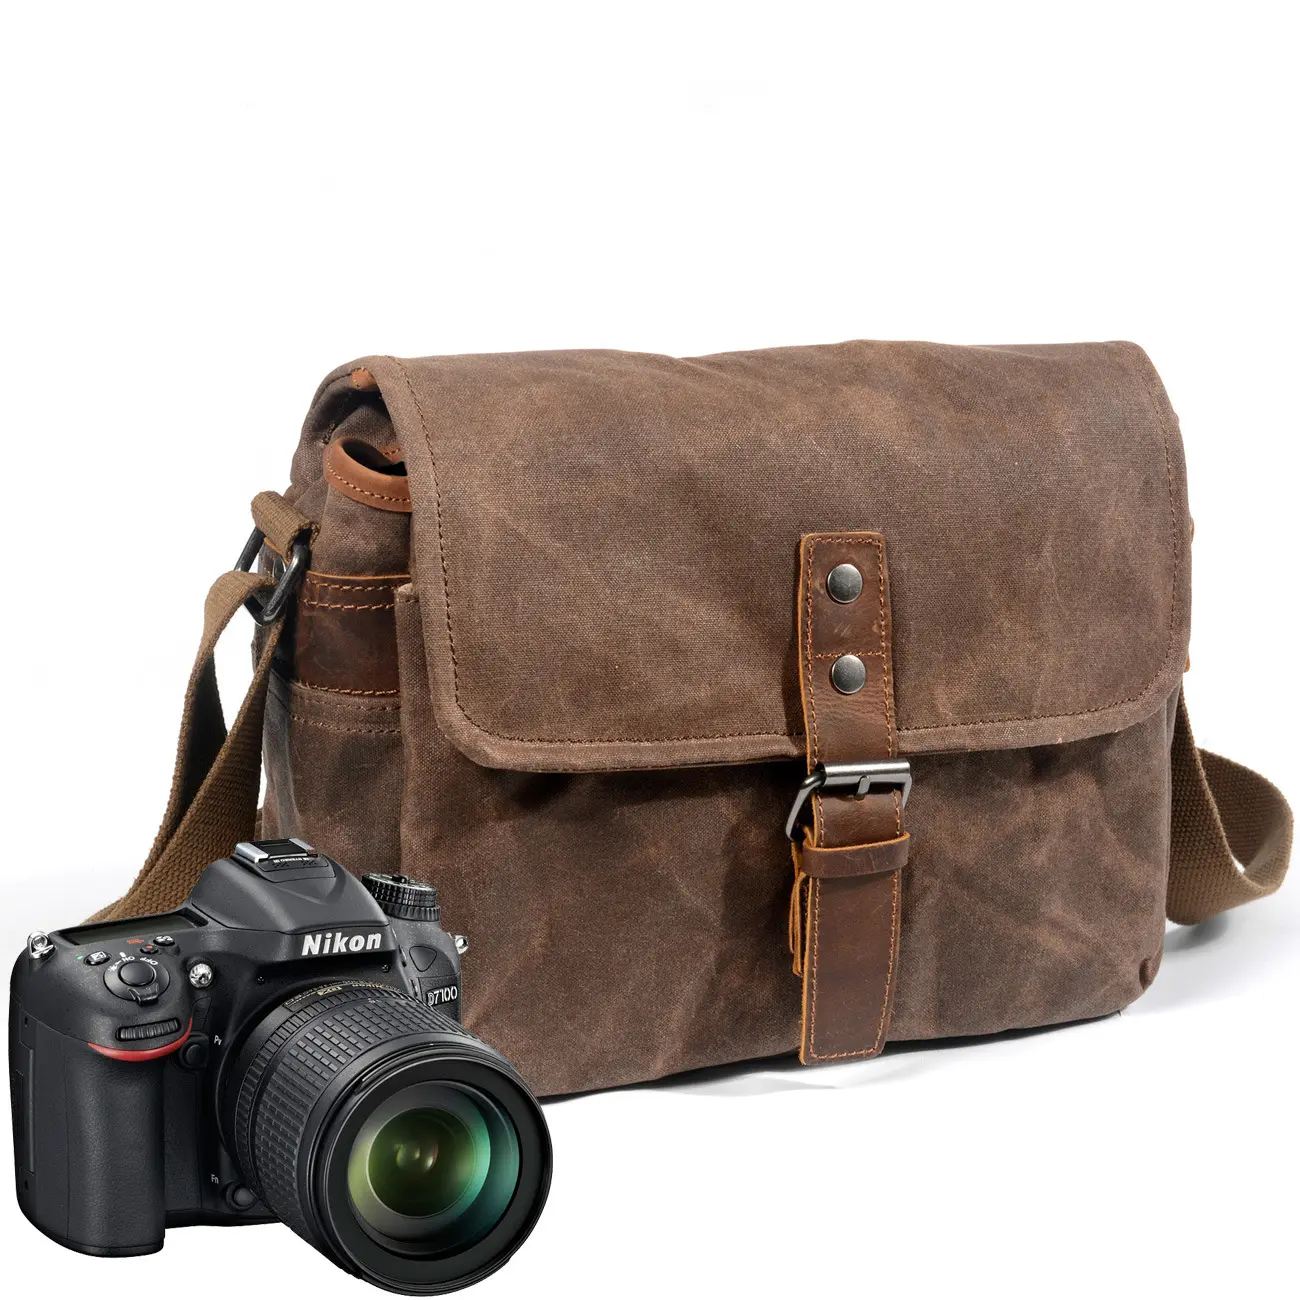 Yuhong Manufacturers New Outdoor Camera Bag Digital SLR Profesional Impermeable Oil Wax Canvas Camera Shoulder Bag